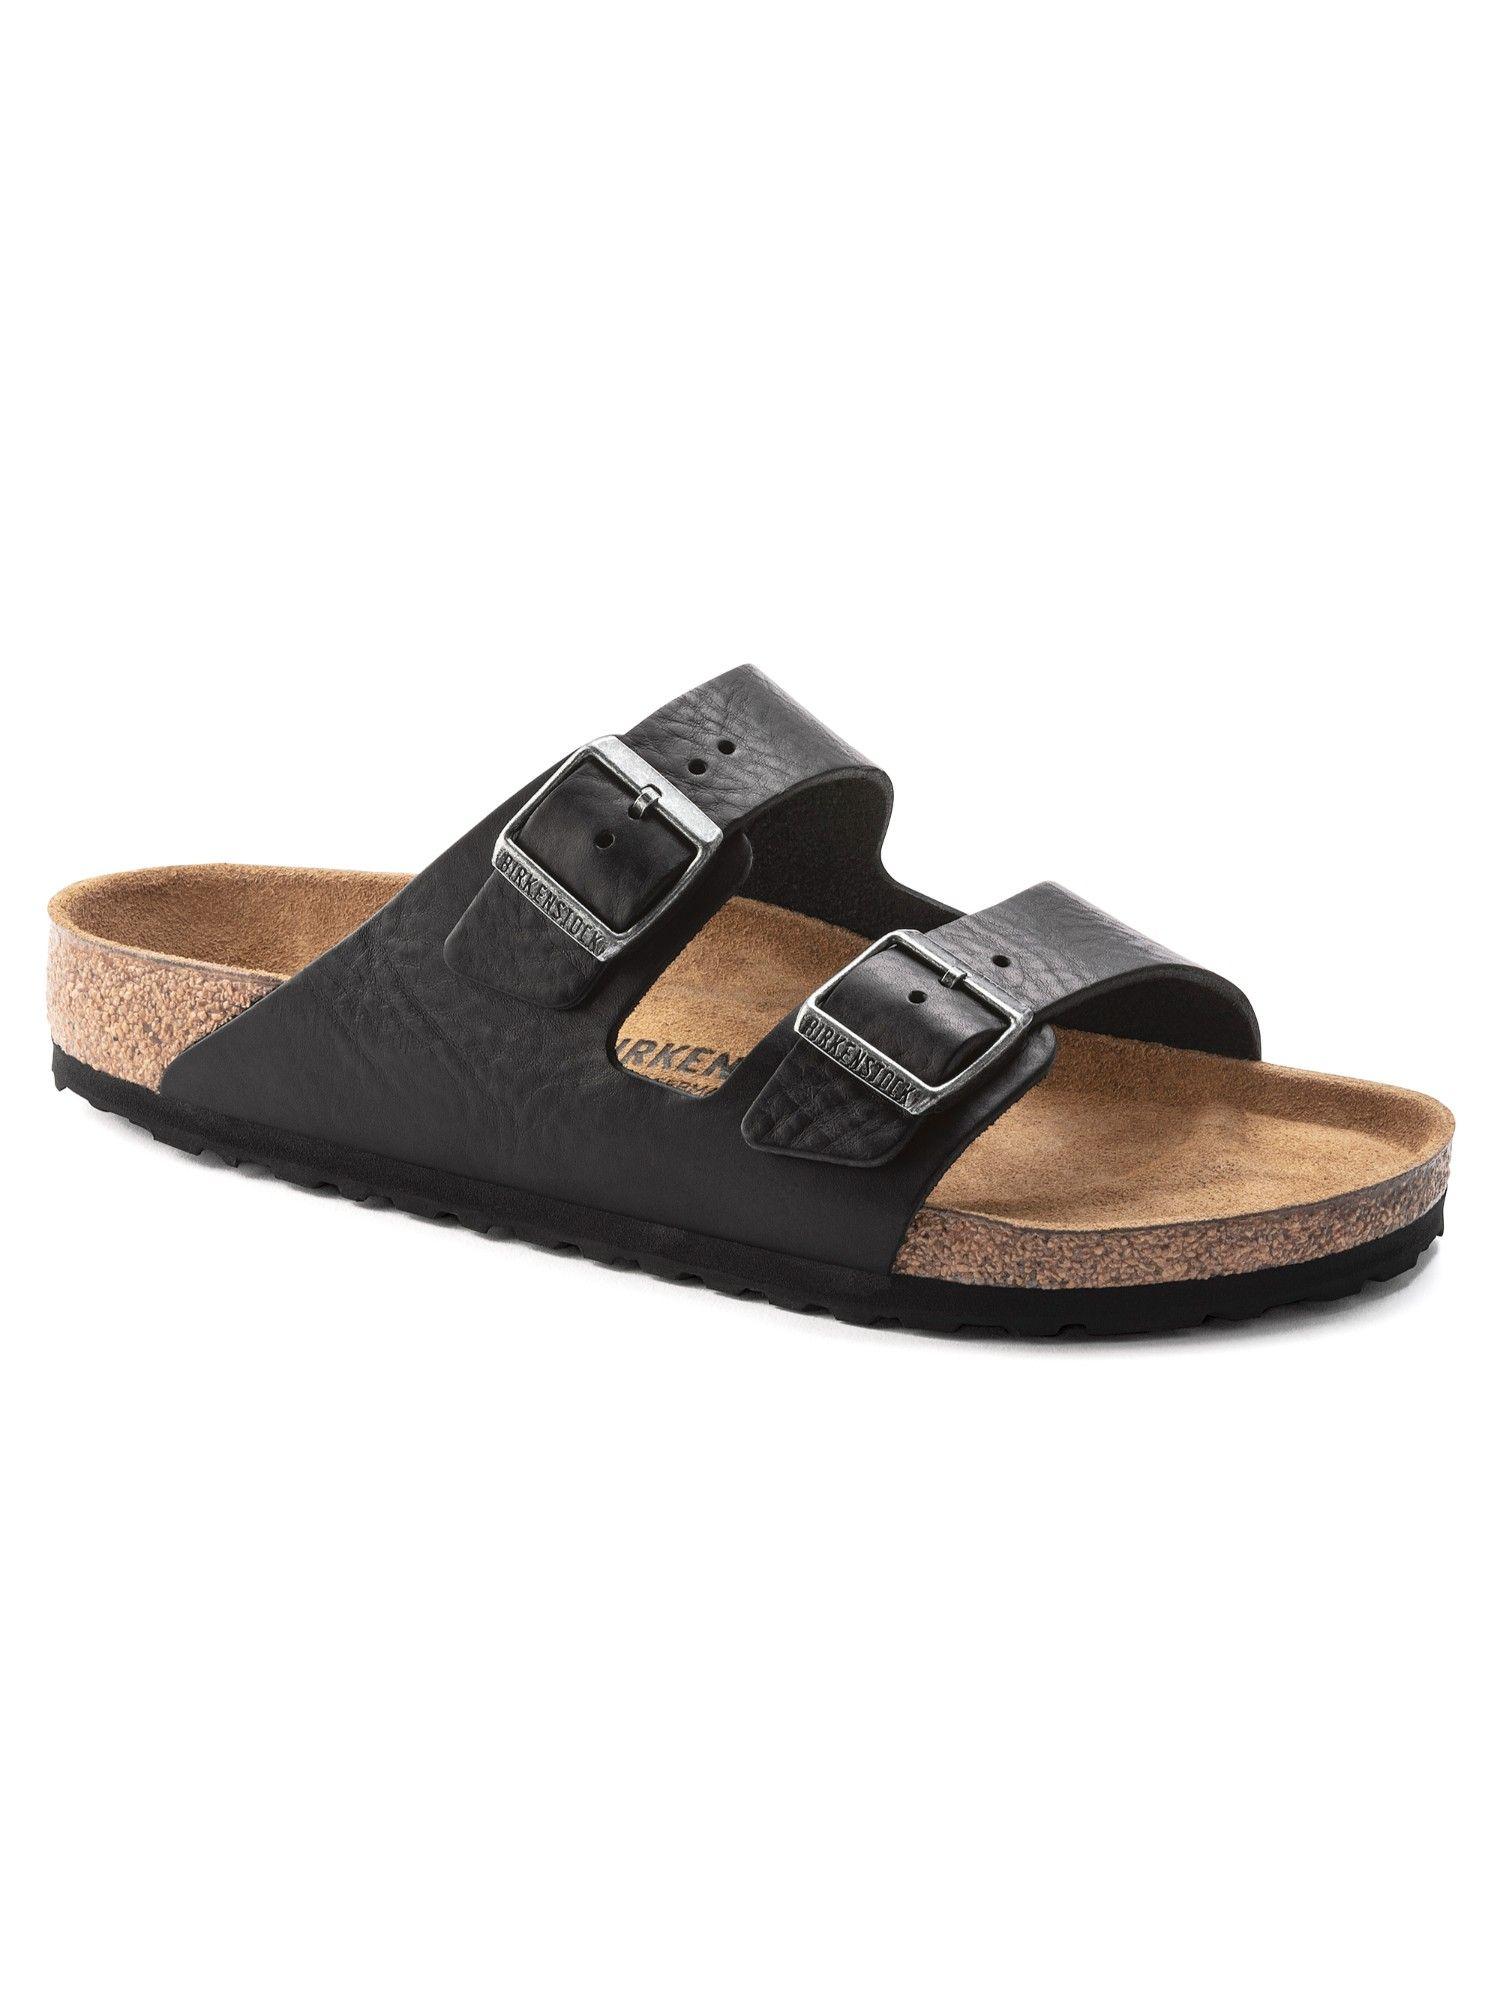 arizona-grip-vintage-wood-black-narrow-width-men-two-strap-sandals